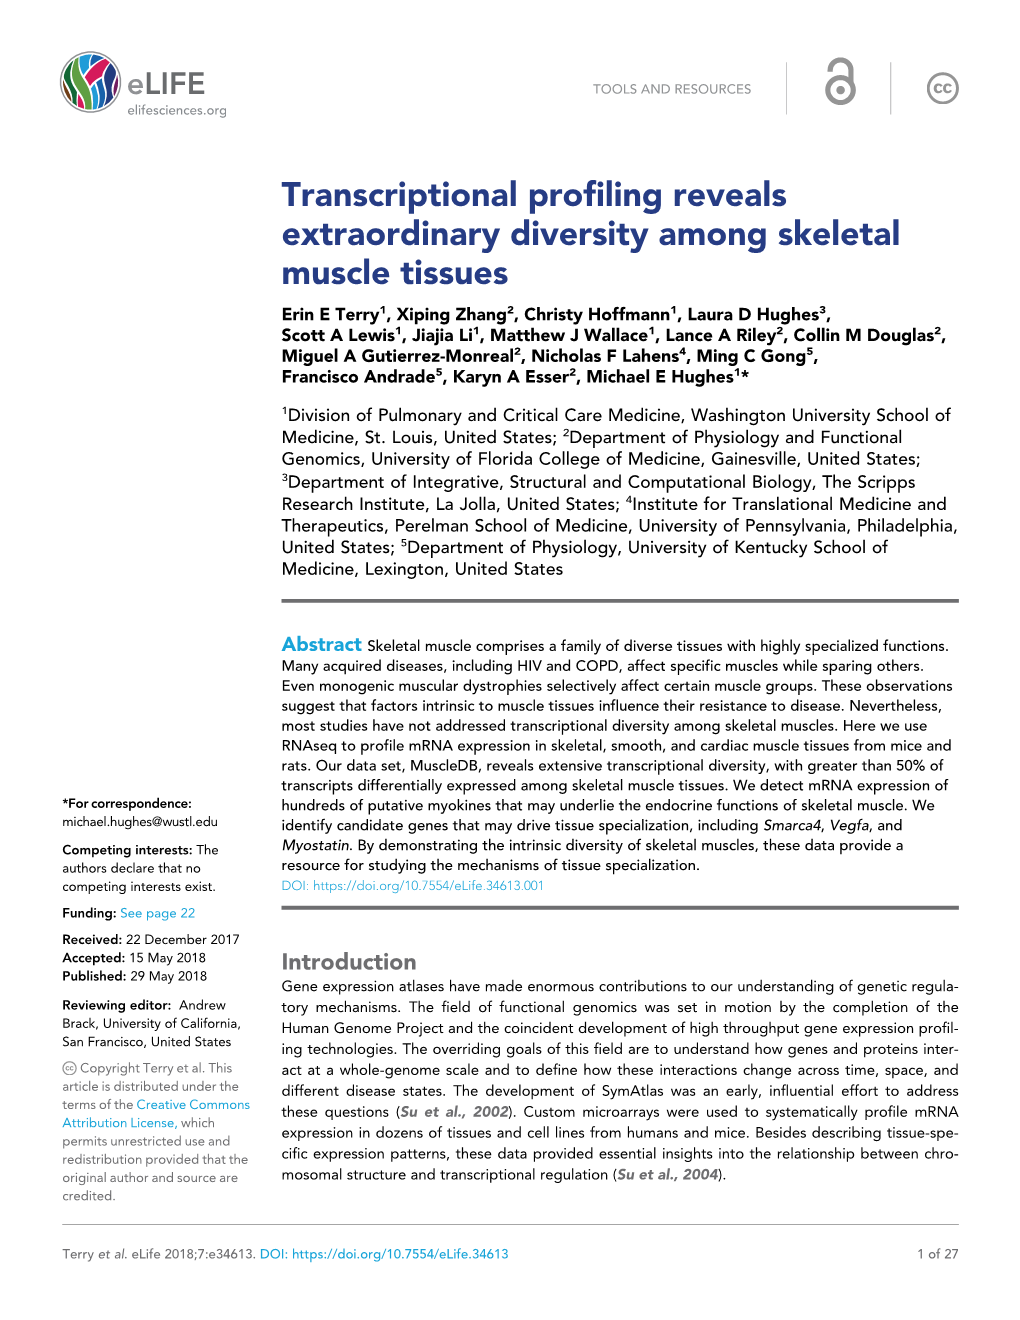 Transcriptional Profiling Reveals Extraordinary Diversity Among